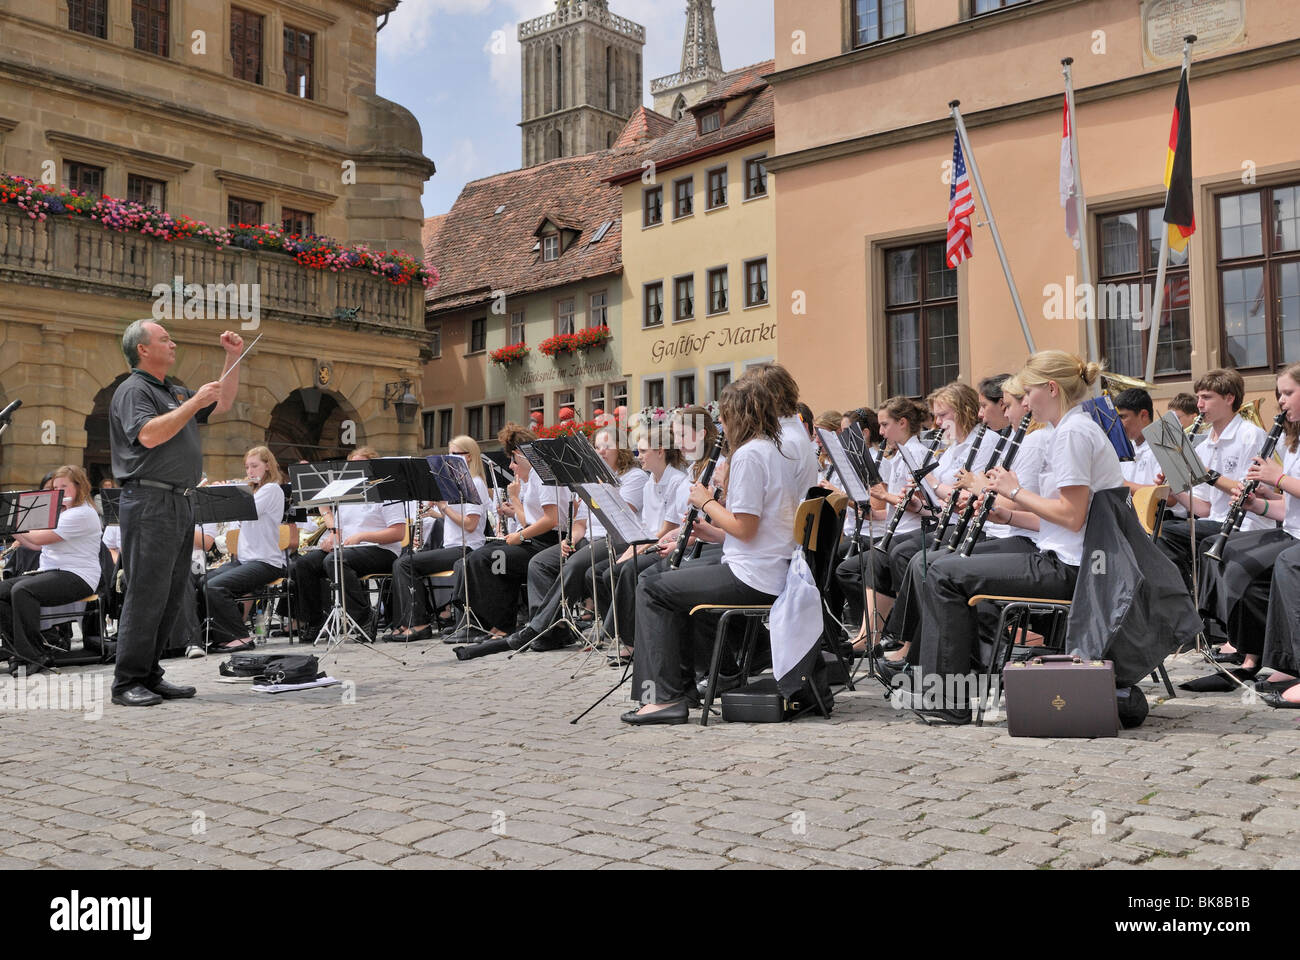 Outdoor concert of a student bigband, Market Square, Rothenburg ob der Tauber, Bavaria, Germany, Europe Stock Photo